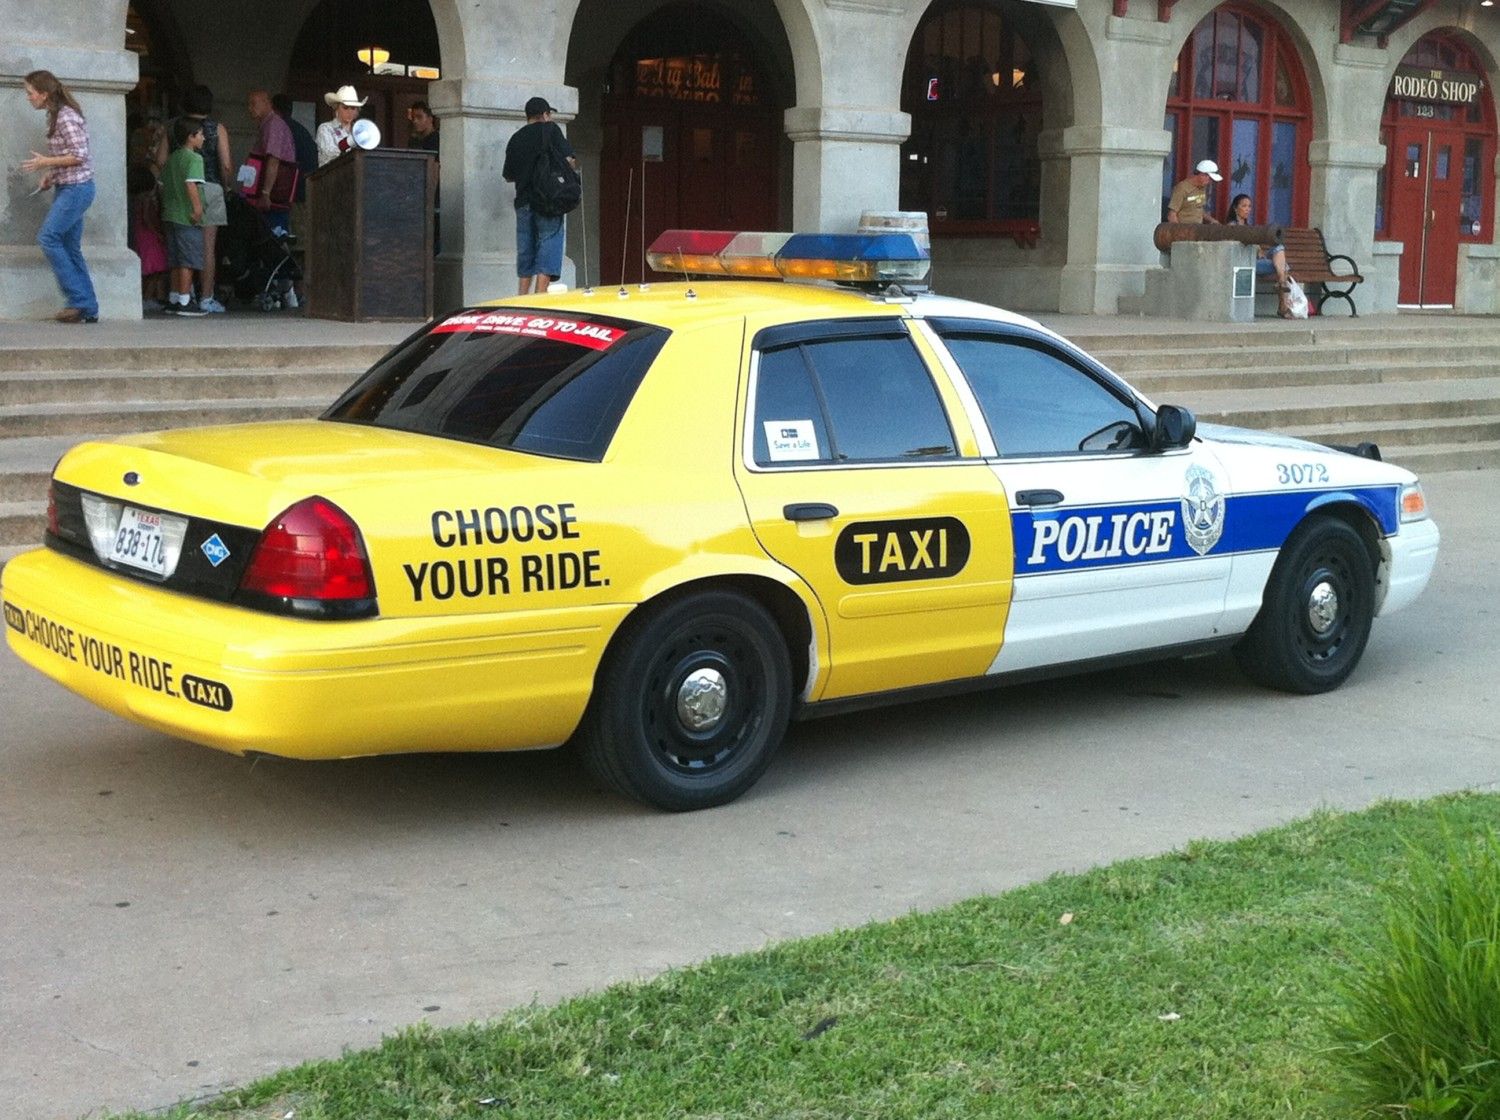 600x448px-LL-a5238777_police-taxi.jpeg